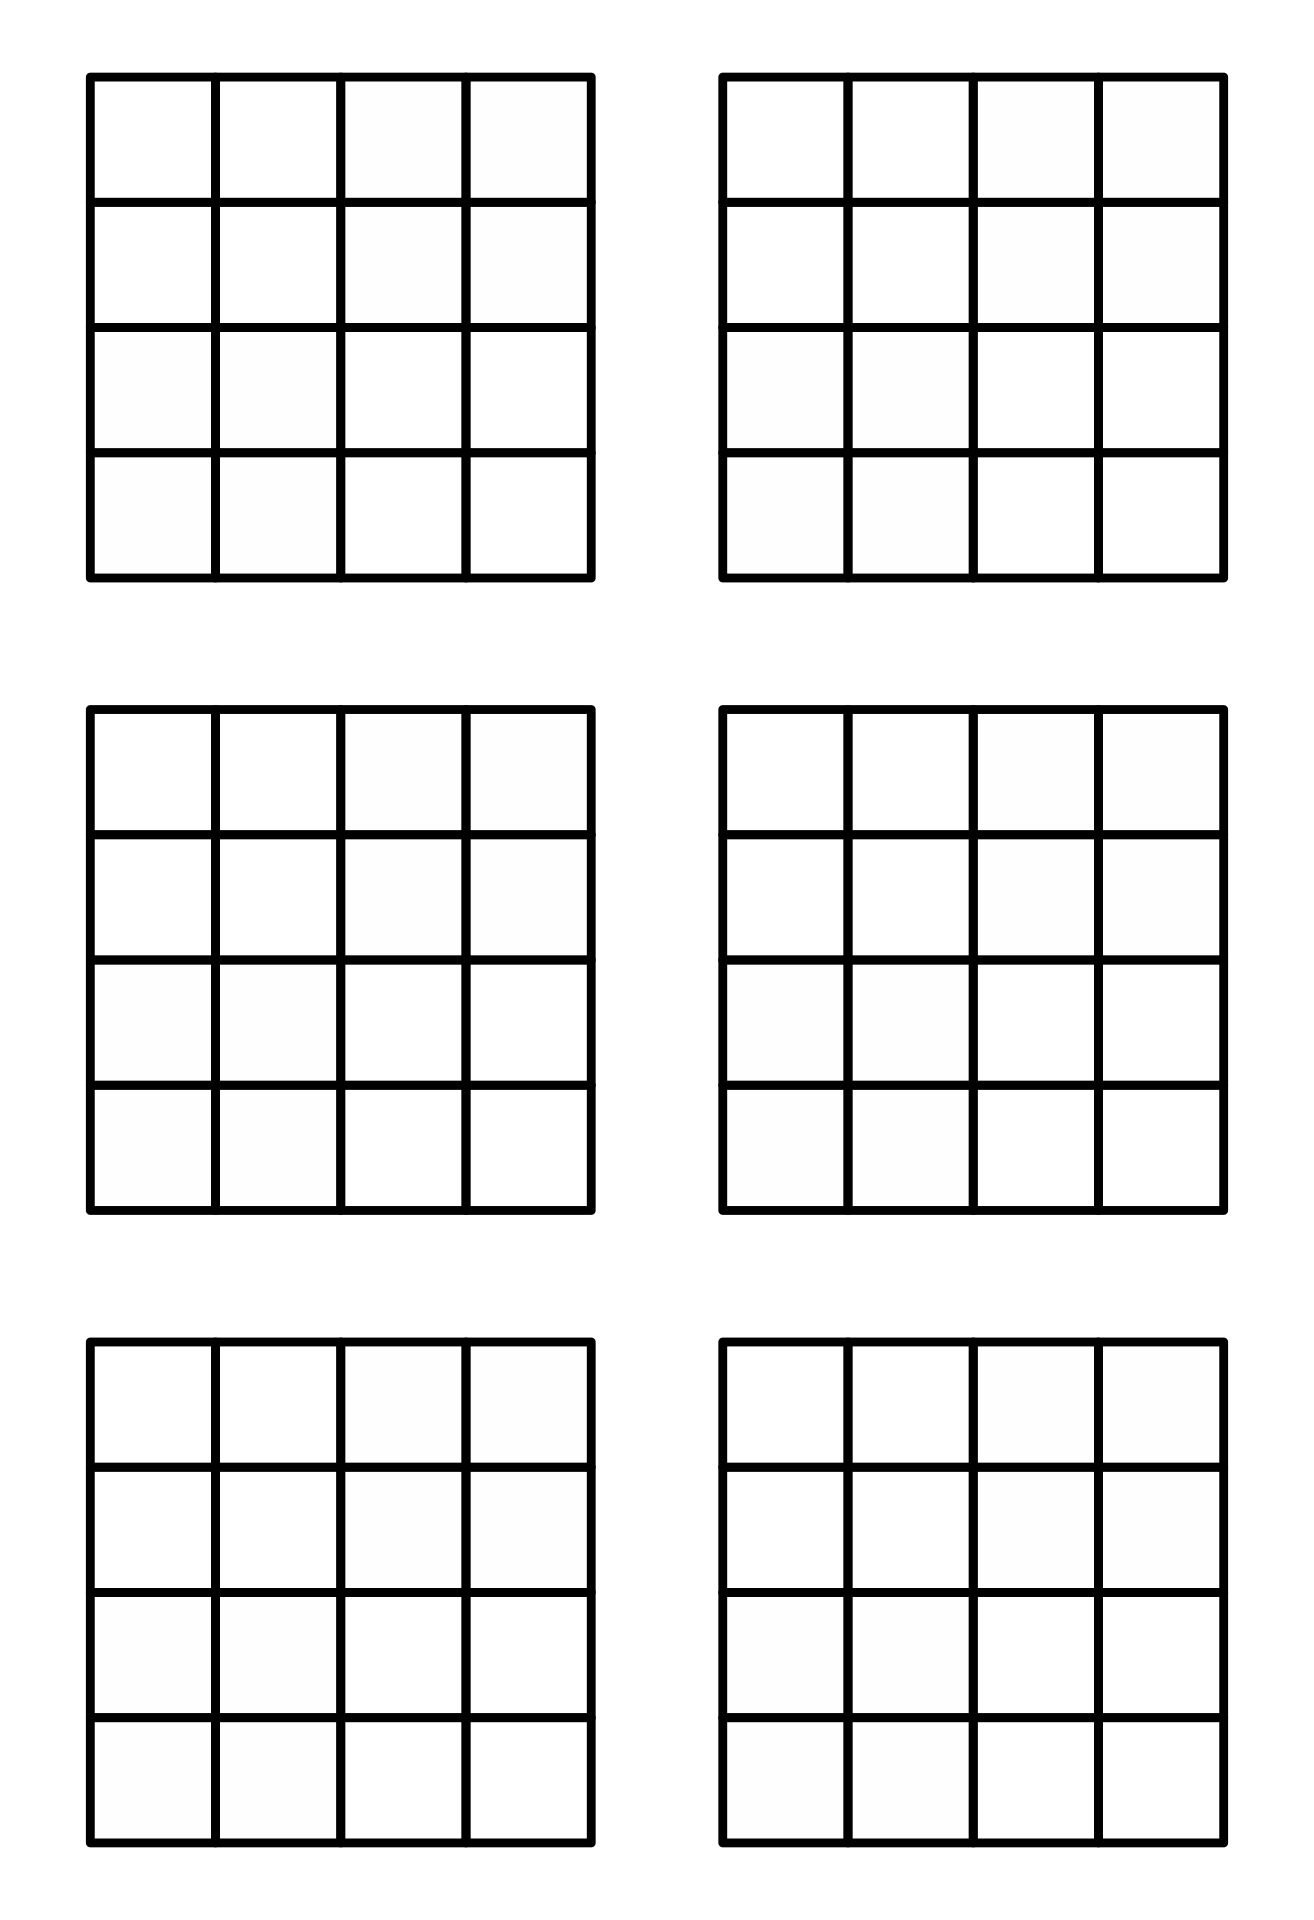 Sudoku Printables 6 Per Page_96351